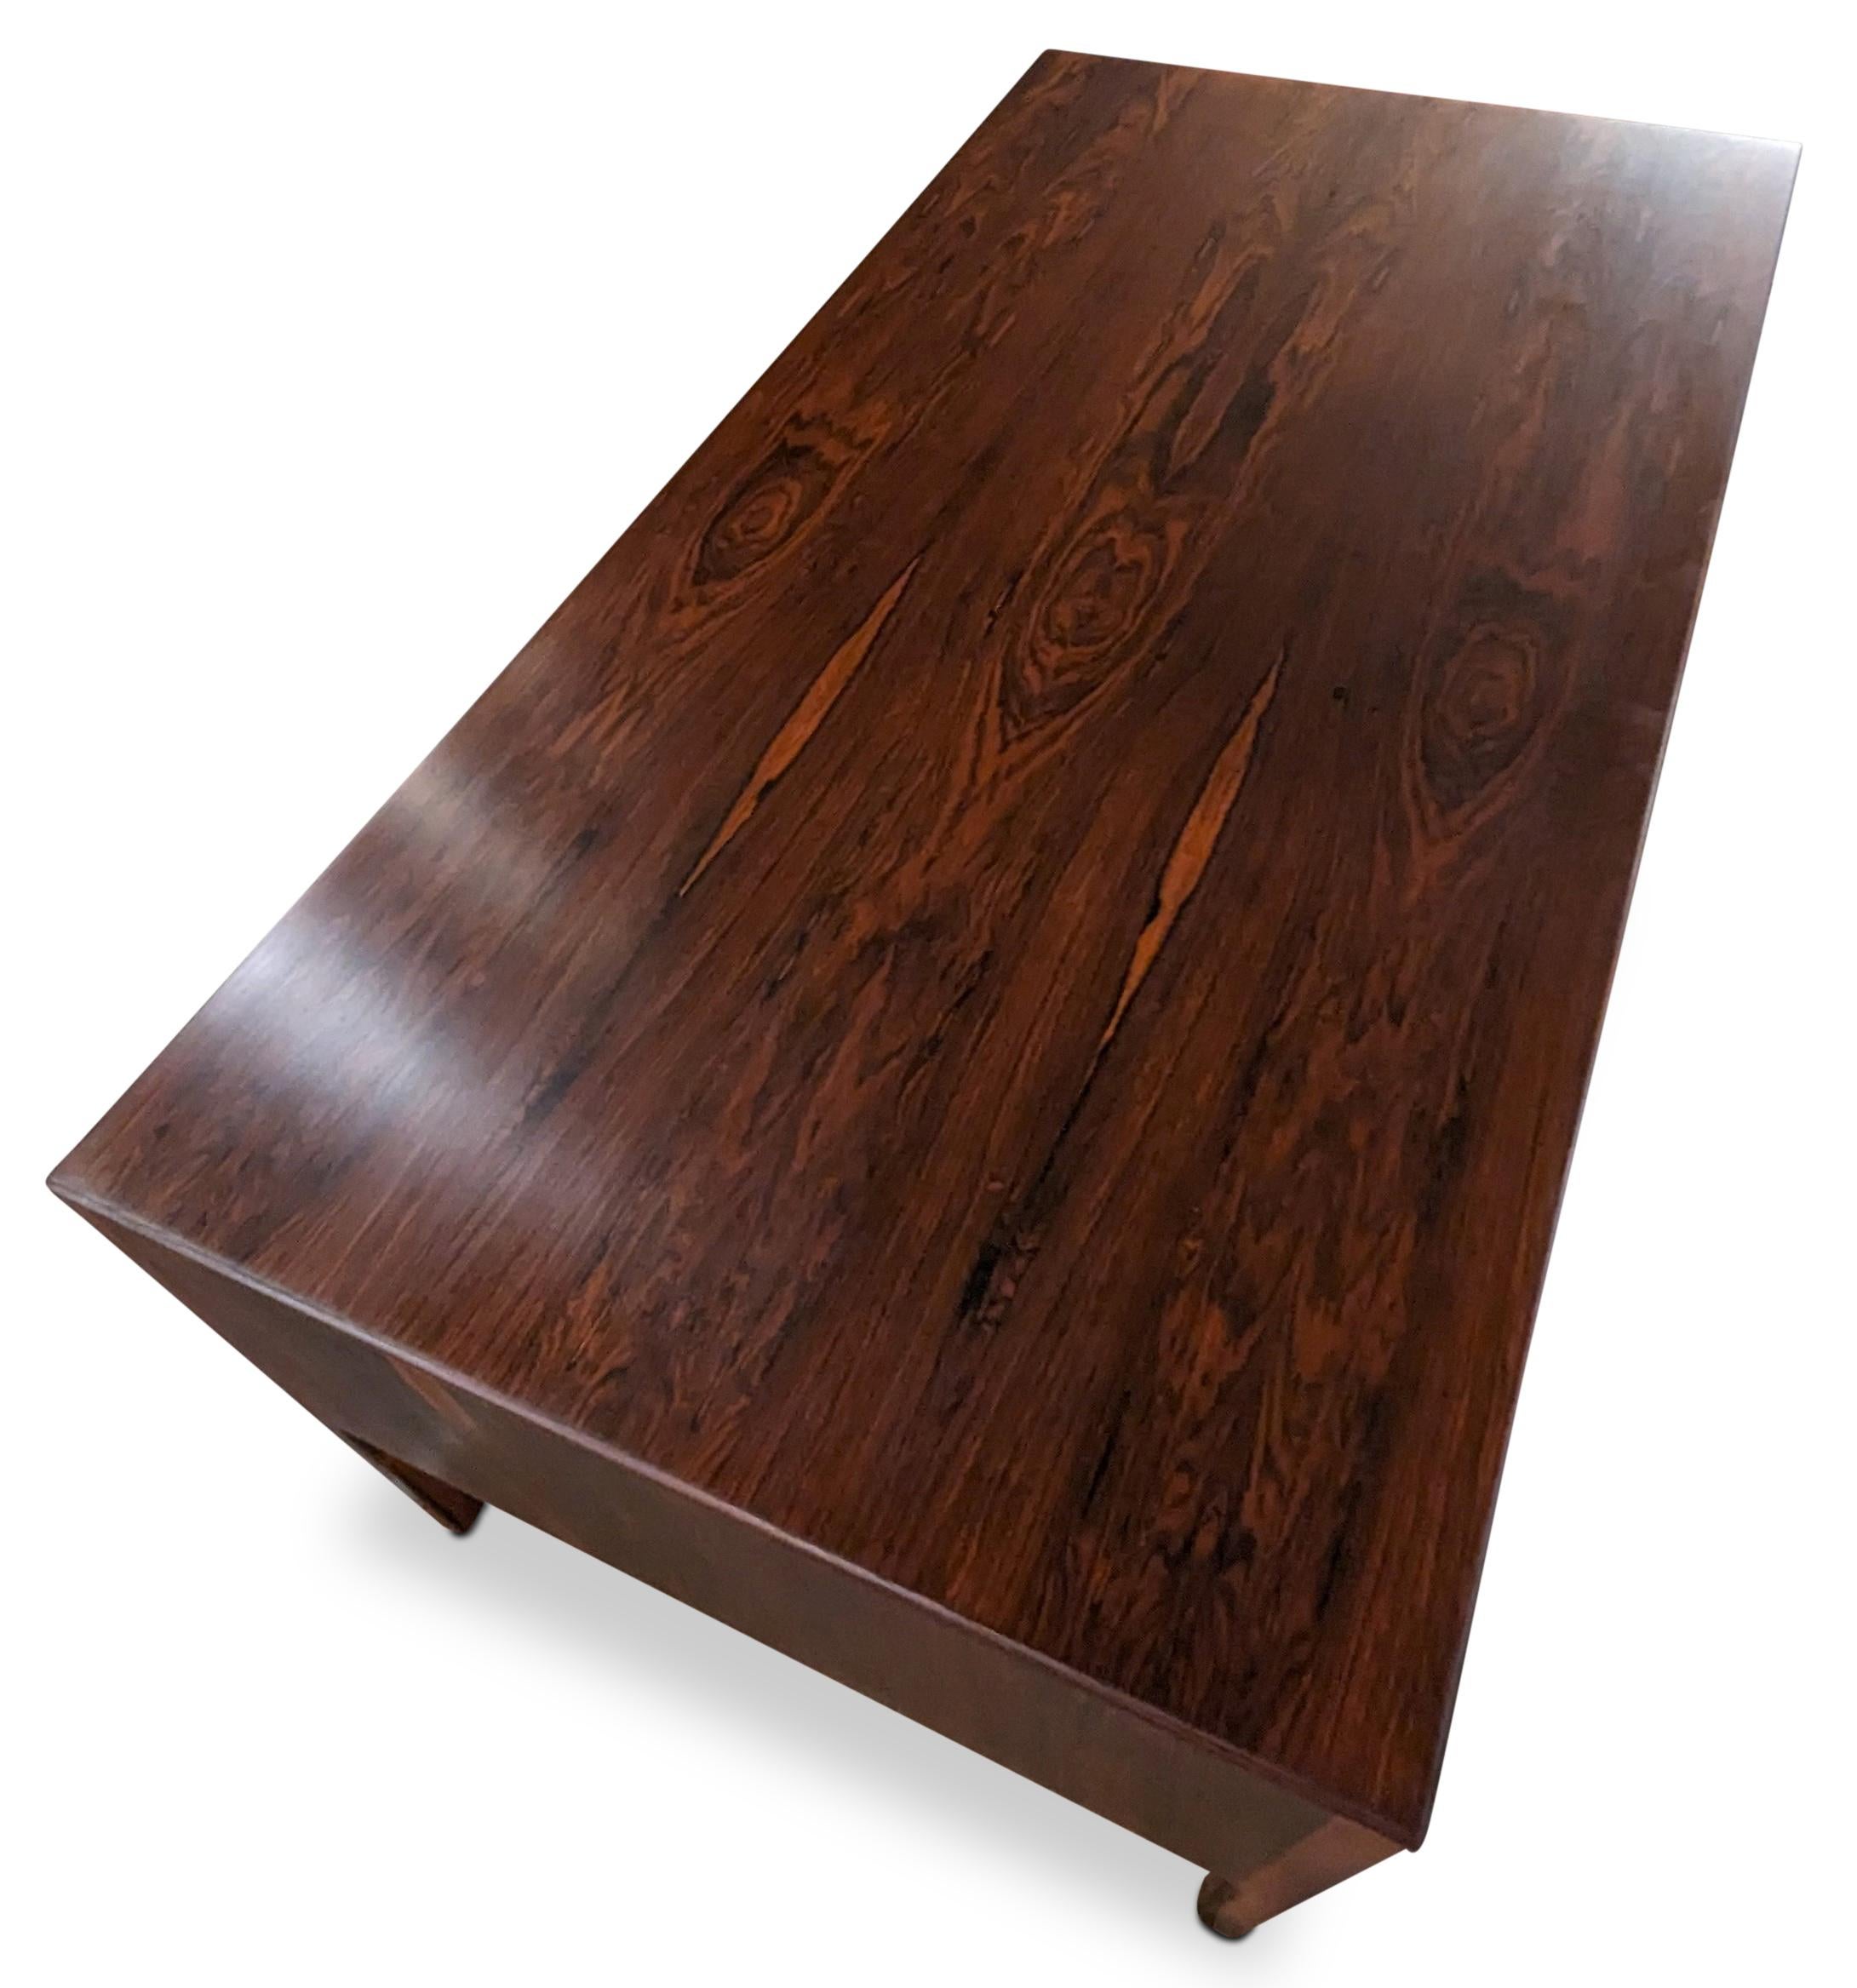 Ole Wancher Rosewood Desk - 0823177 Vintage Danish Mid Century For Sale 5